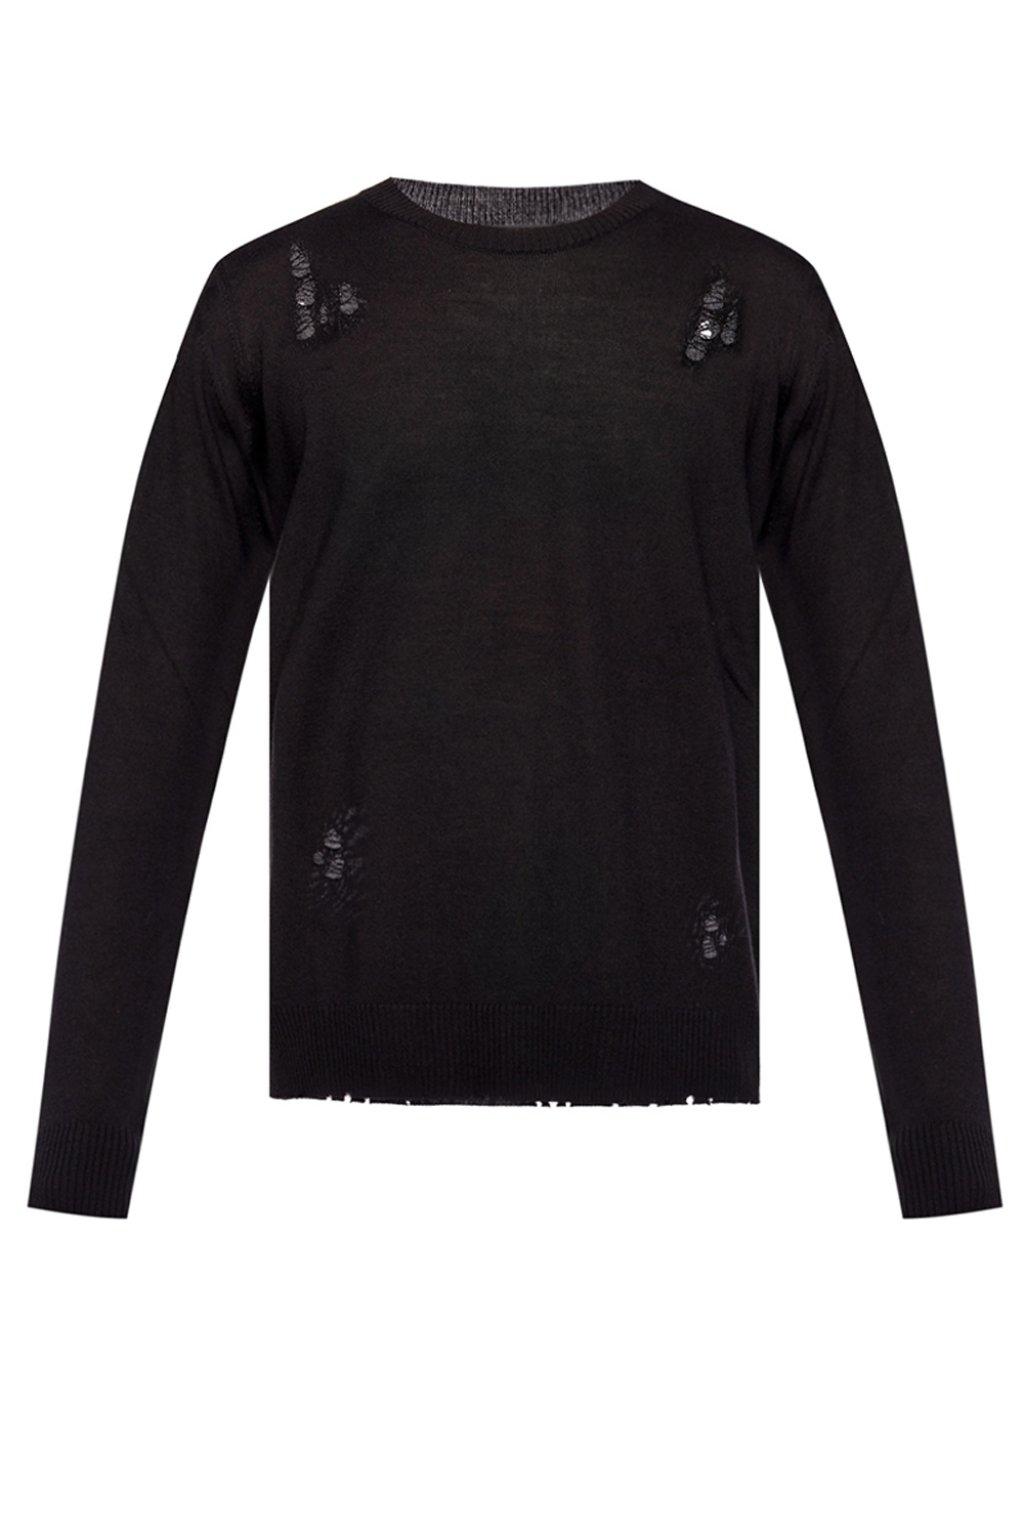 DIESEL Wool Raw-edge Sweater in Black for Men - Lyst